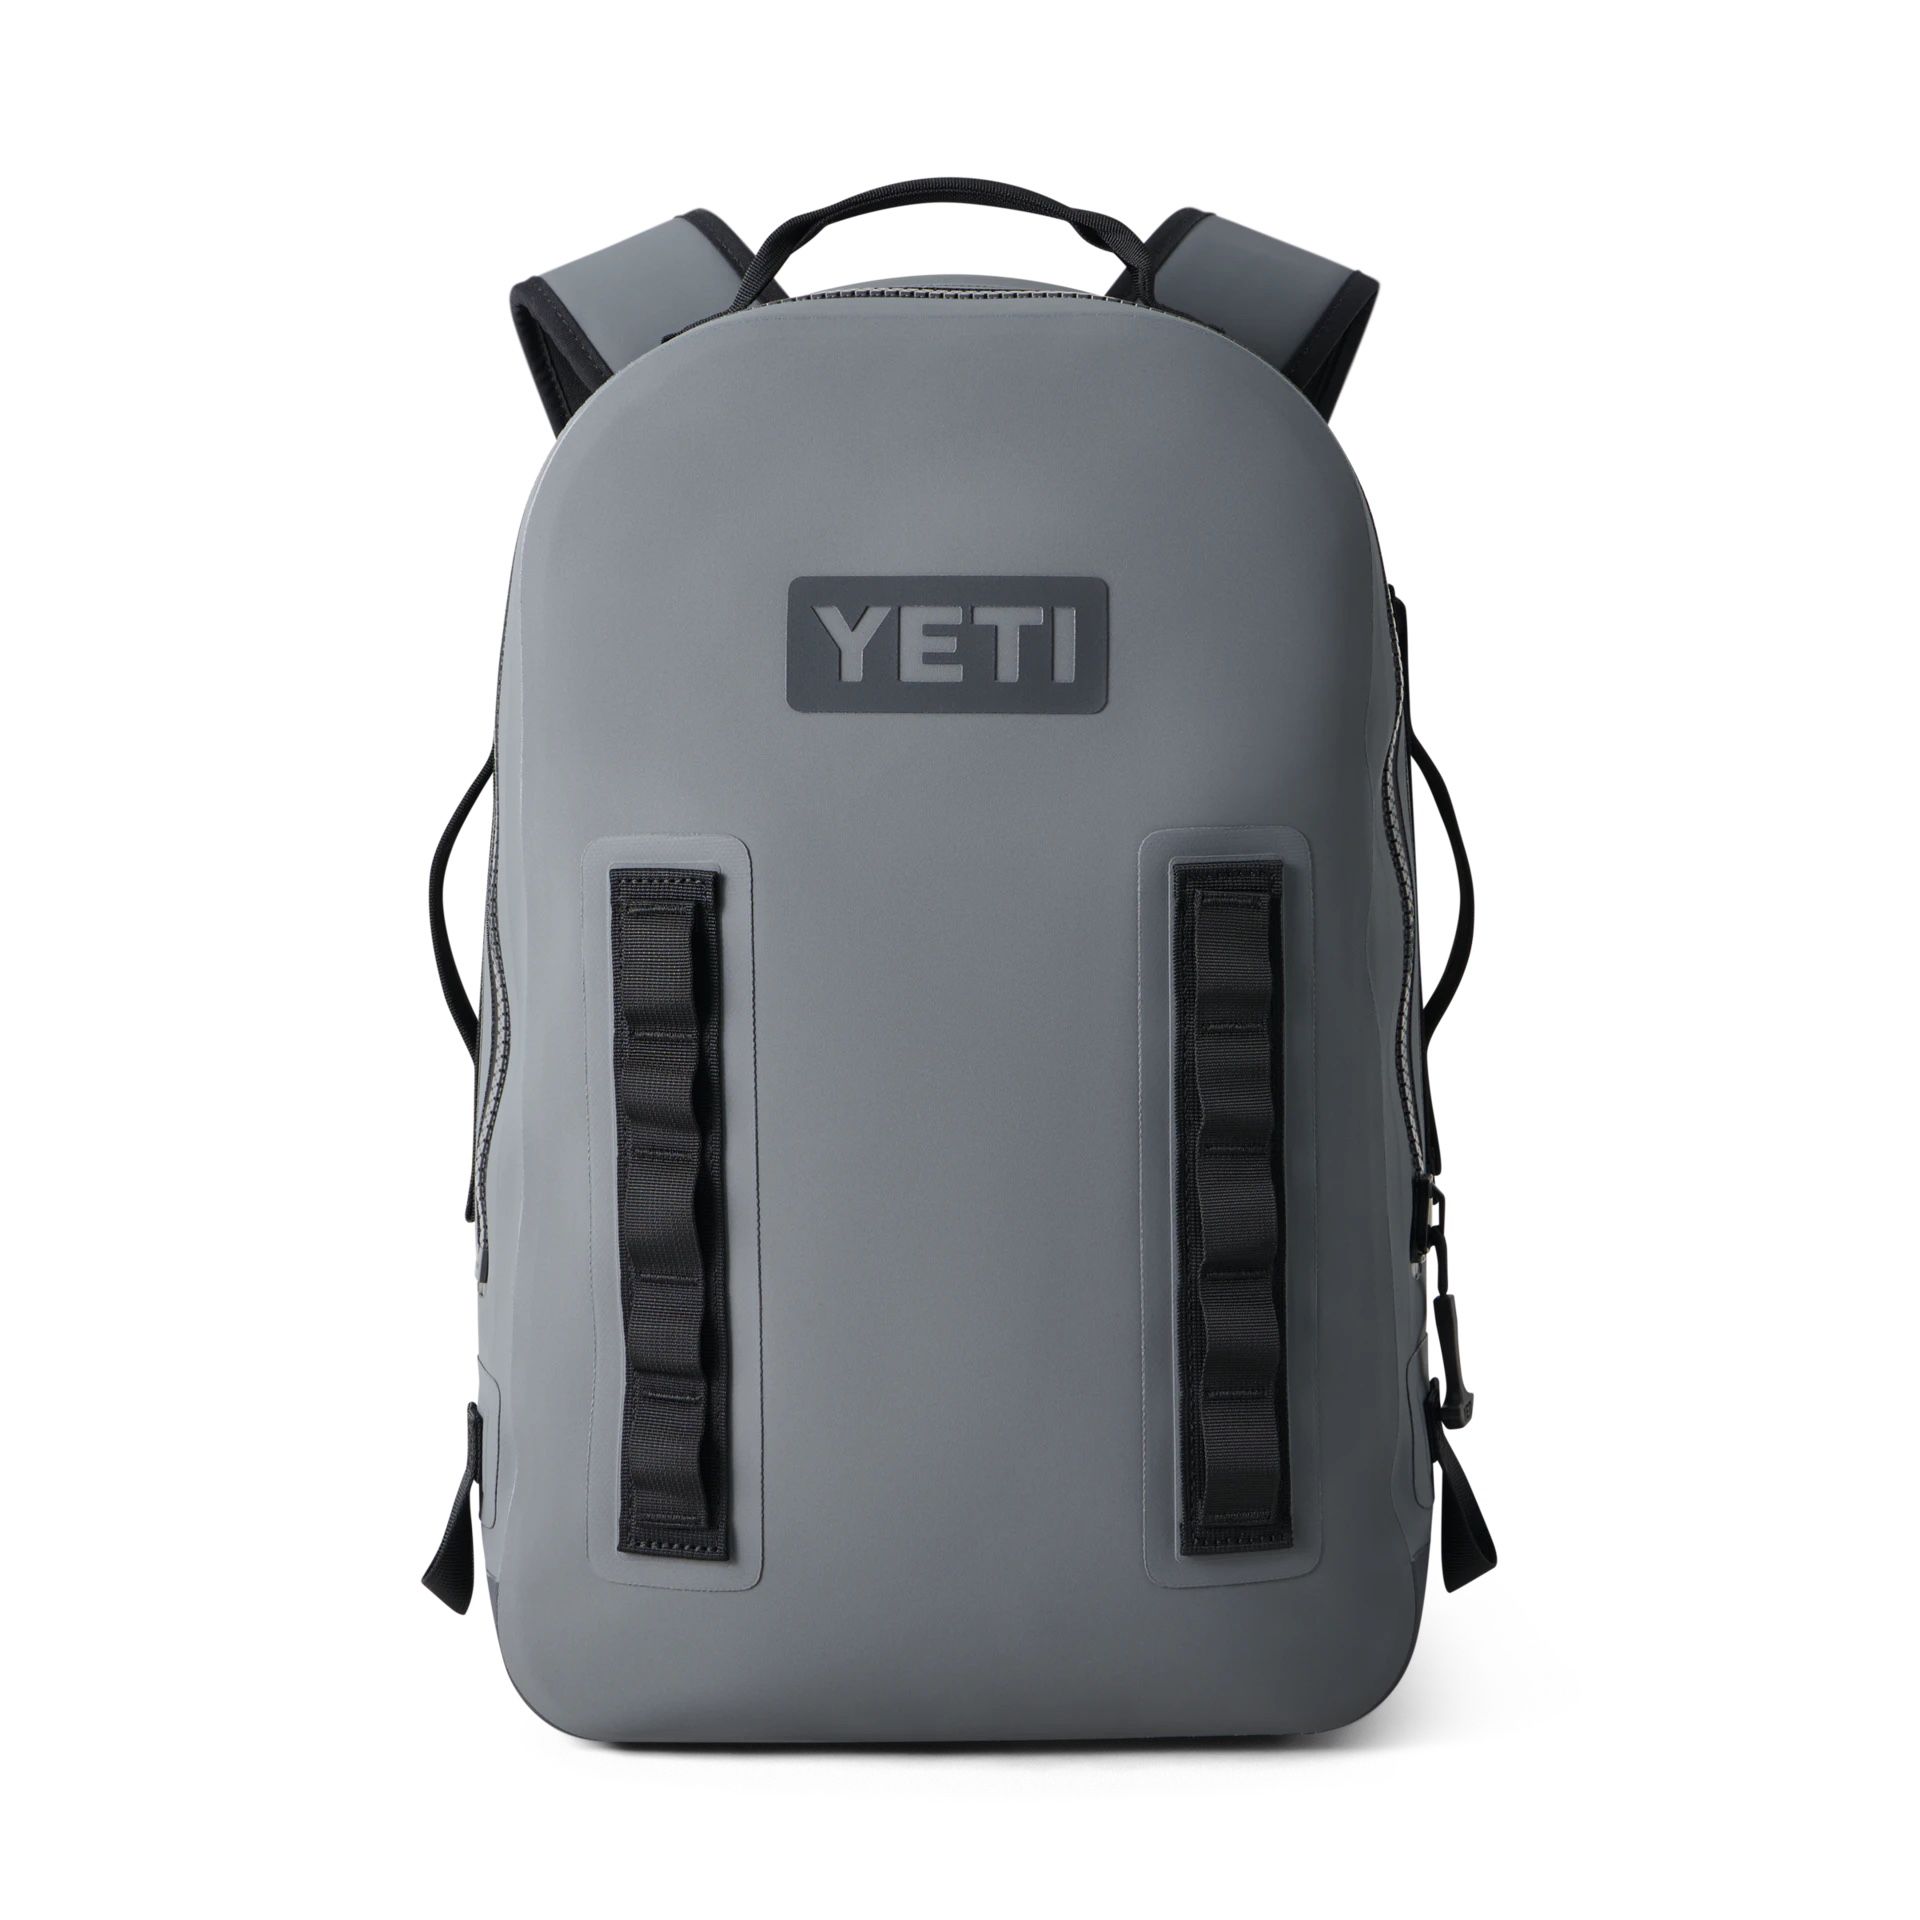 Yeti Panga 28 L Submersible Waterproof Backpack - Storm Gray - New / Never Used